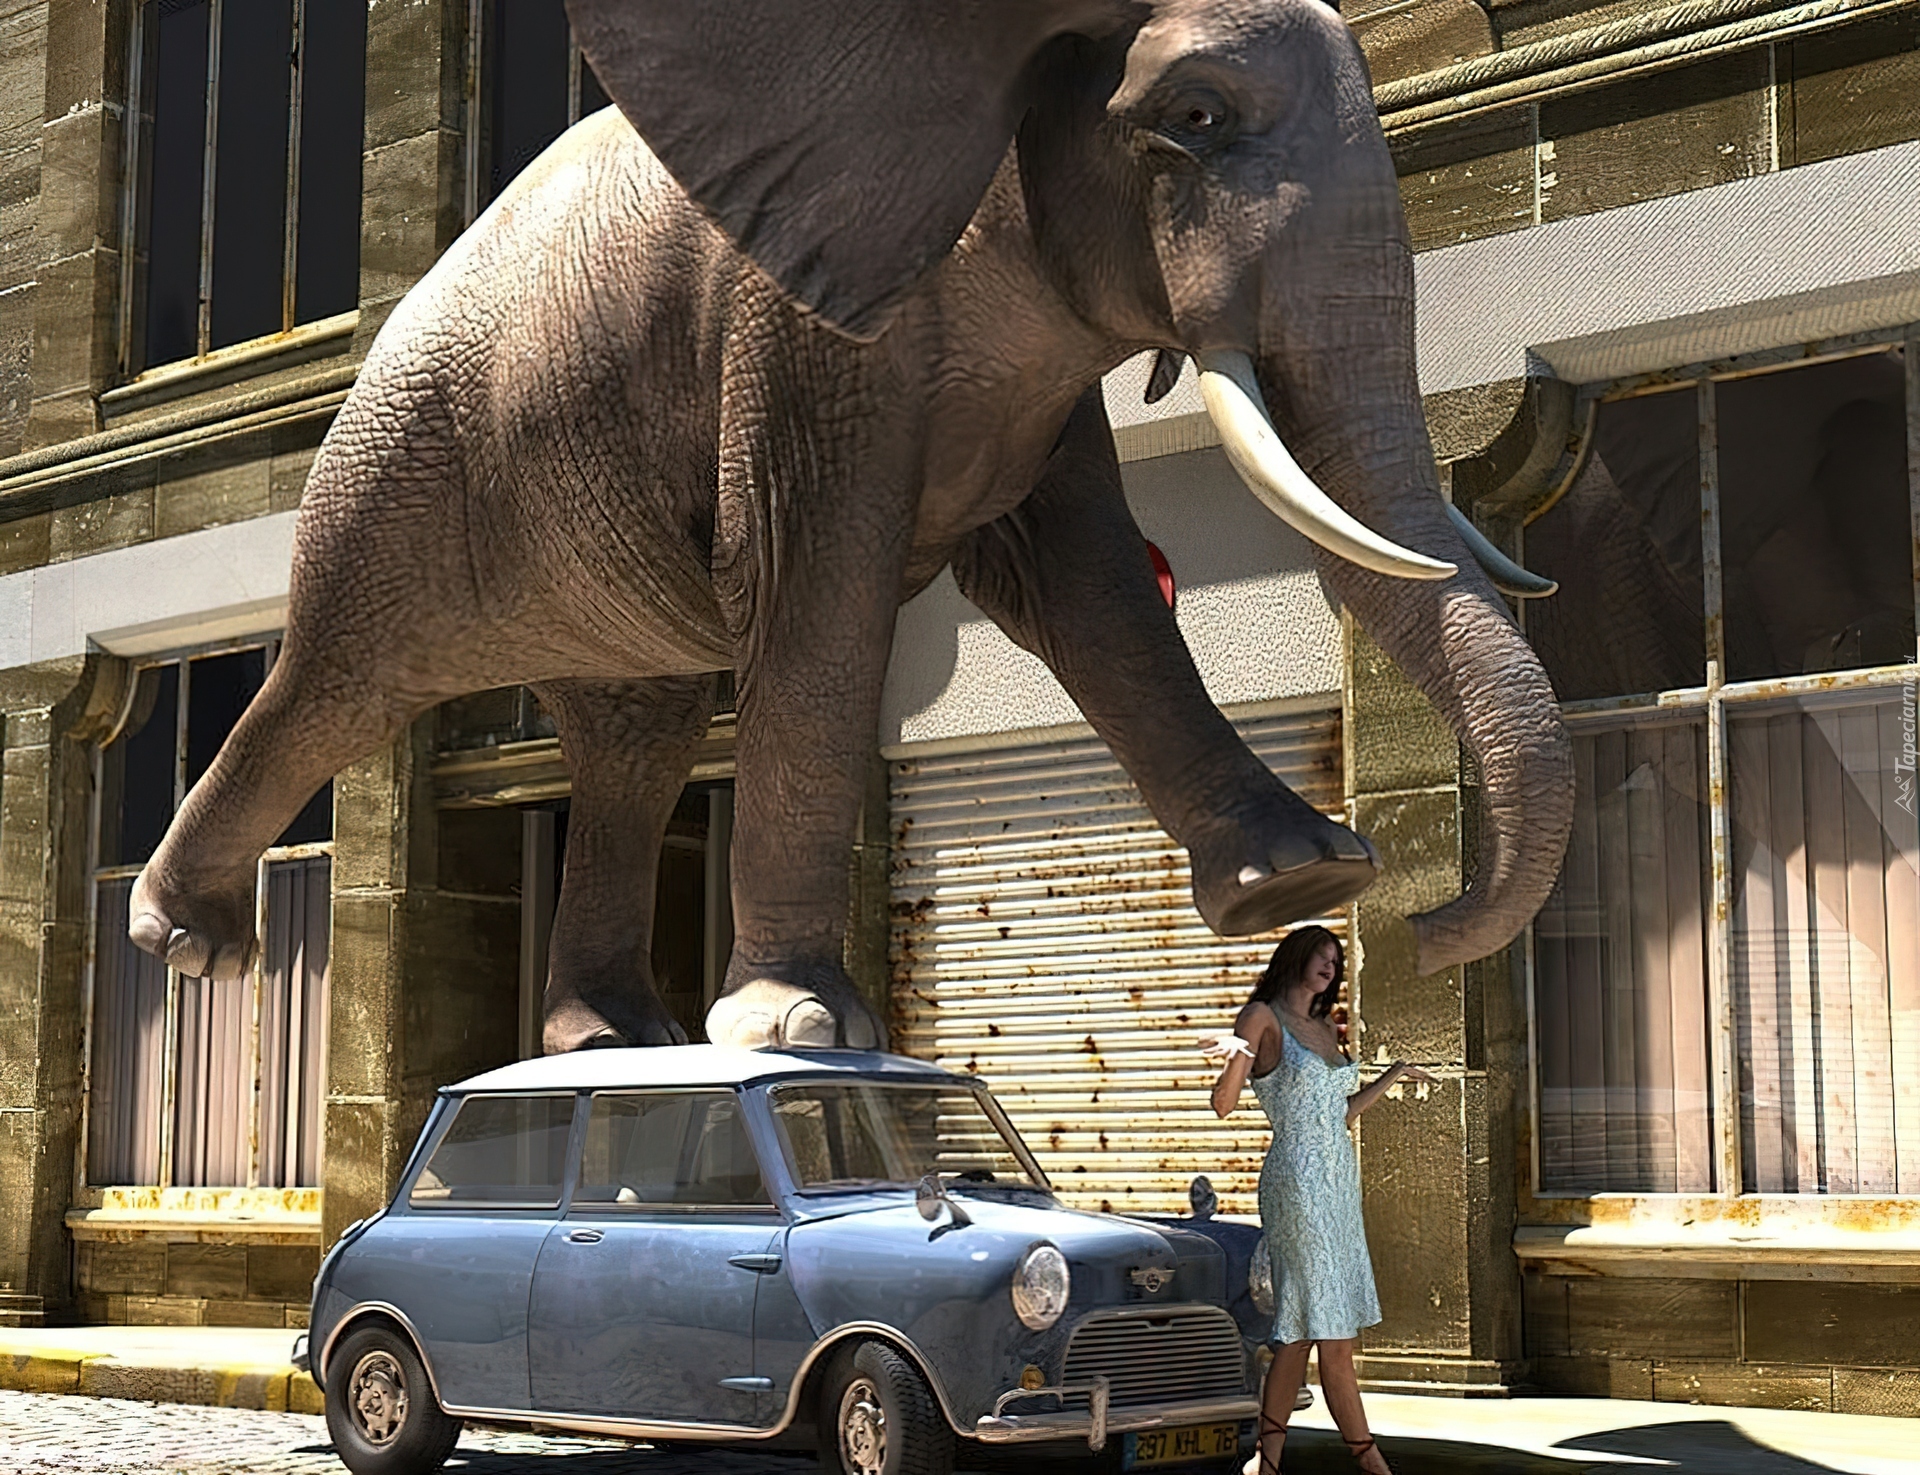 Elephant car